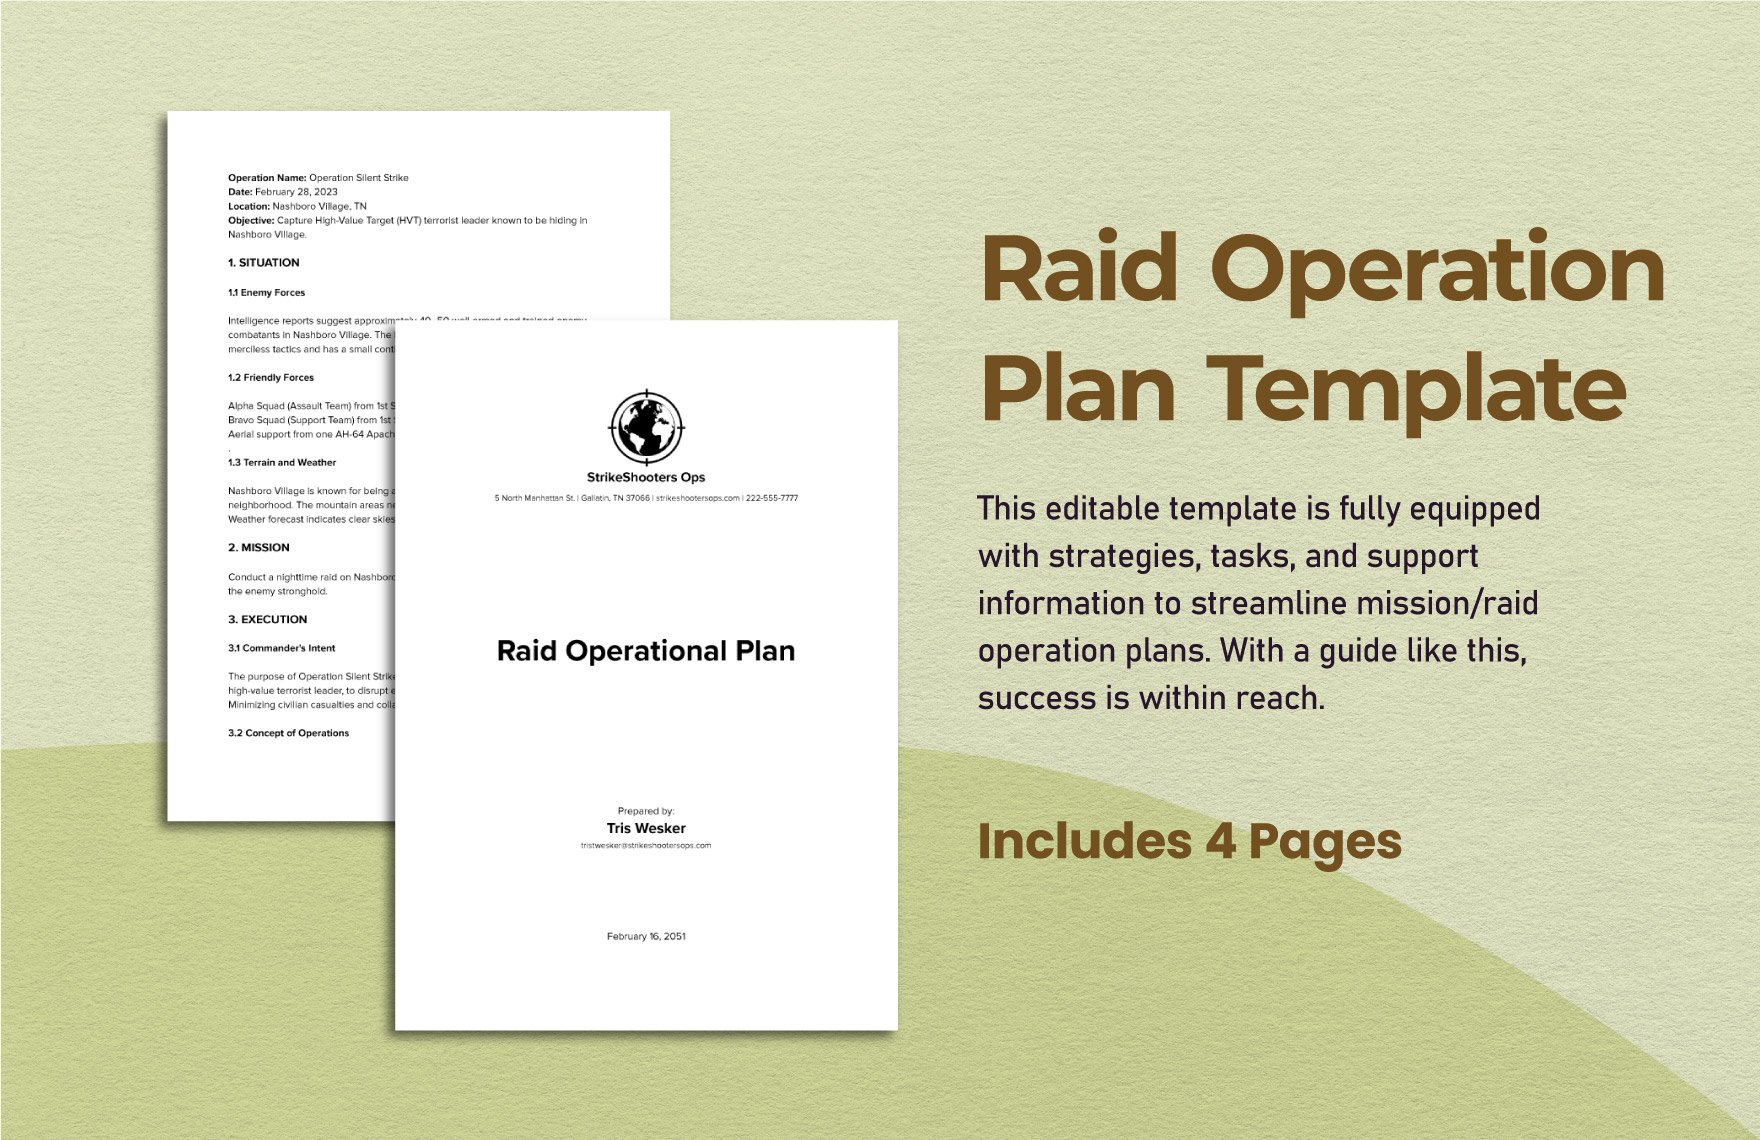 Raid Operation Plan Template